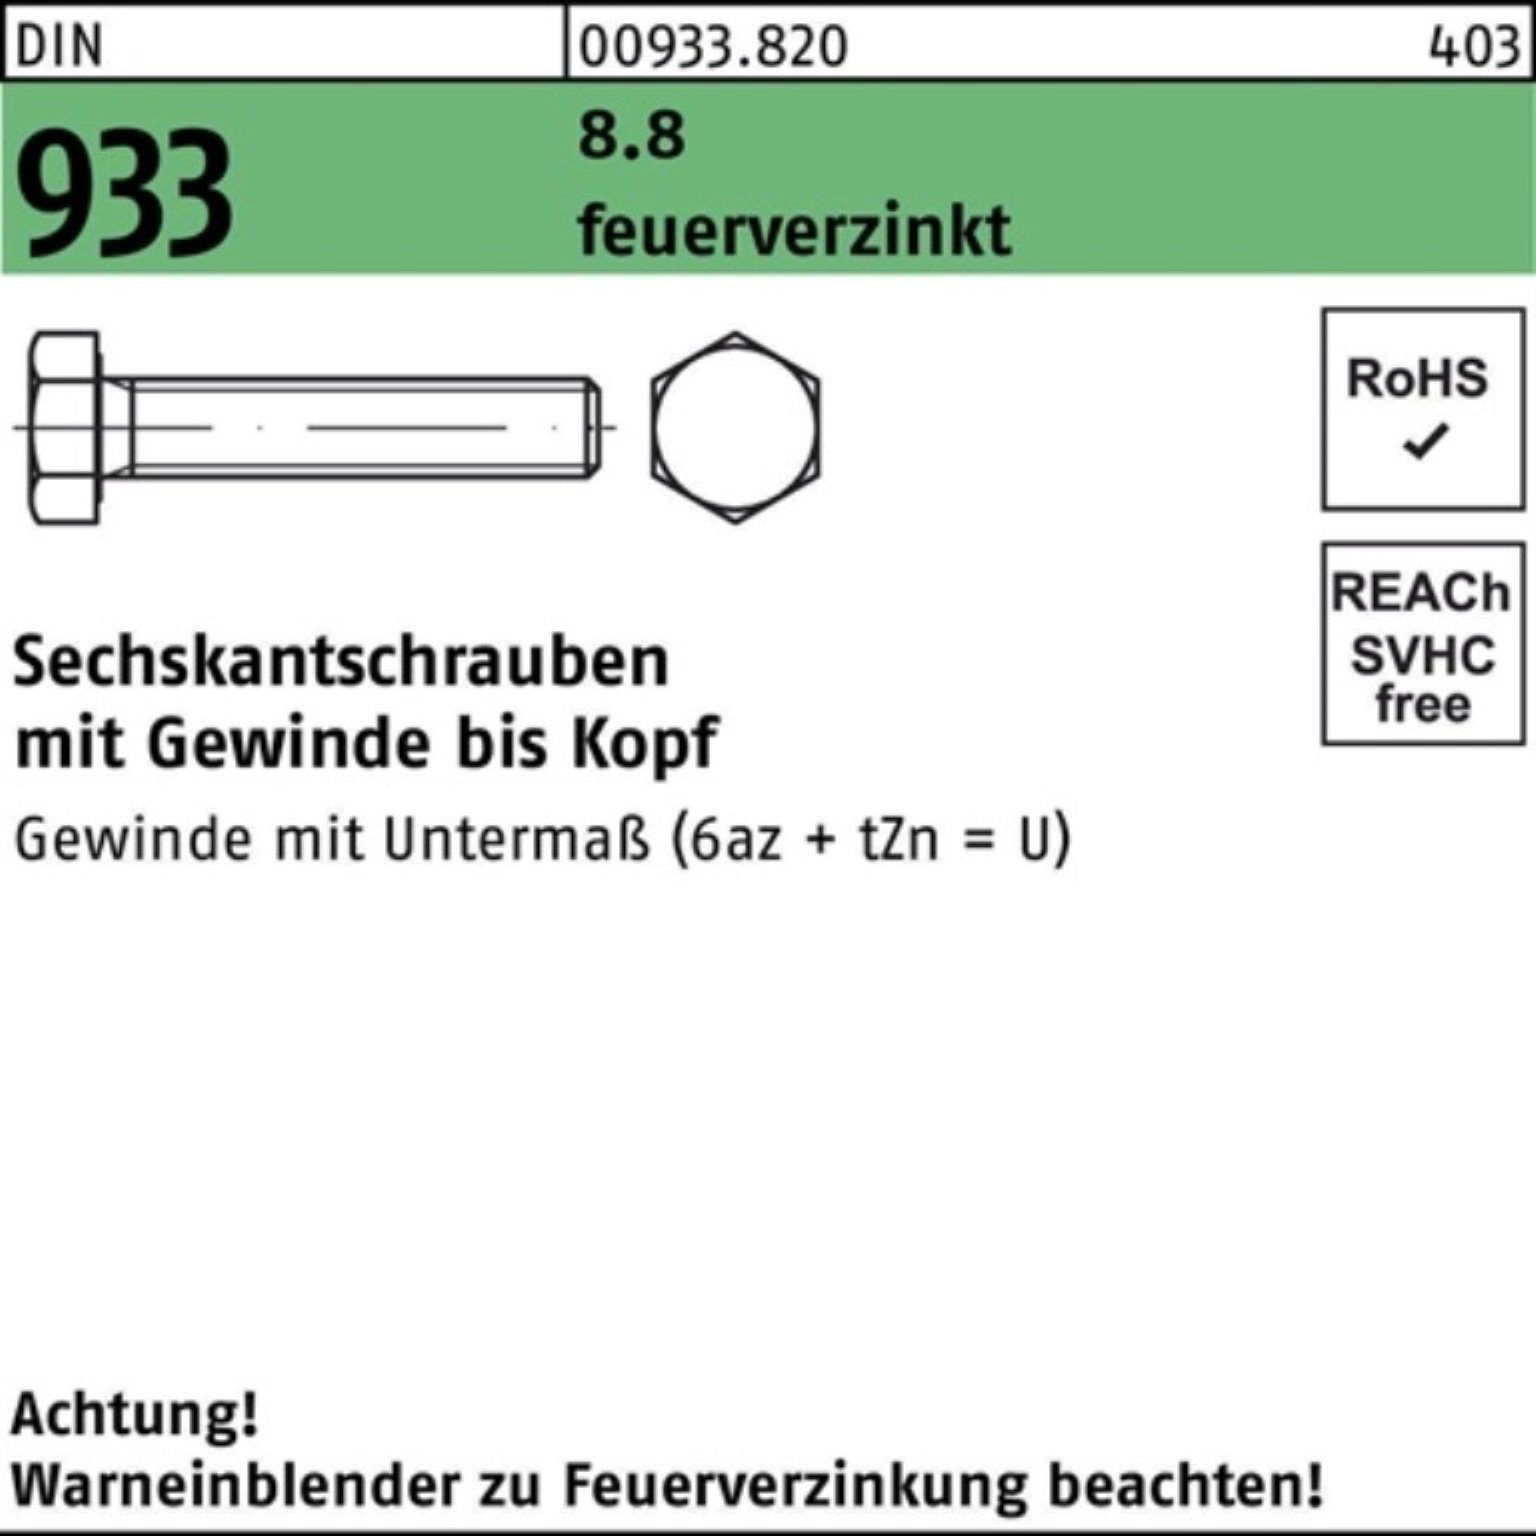 Reyher Sechskantschraube 100er Pack 933 DIN VG St 120 Sechskantschraube M16x 8.8 feuerverz. 25